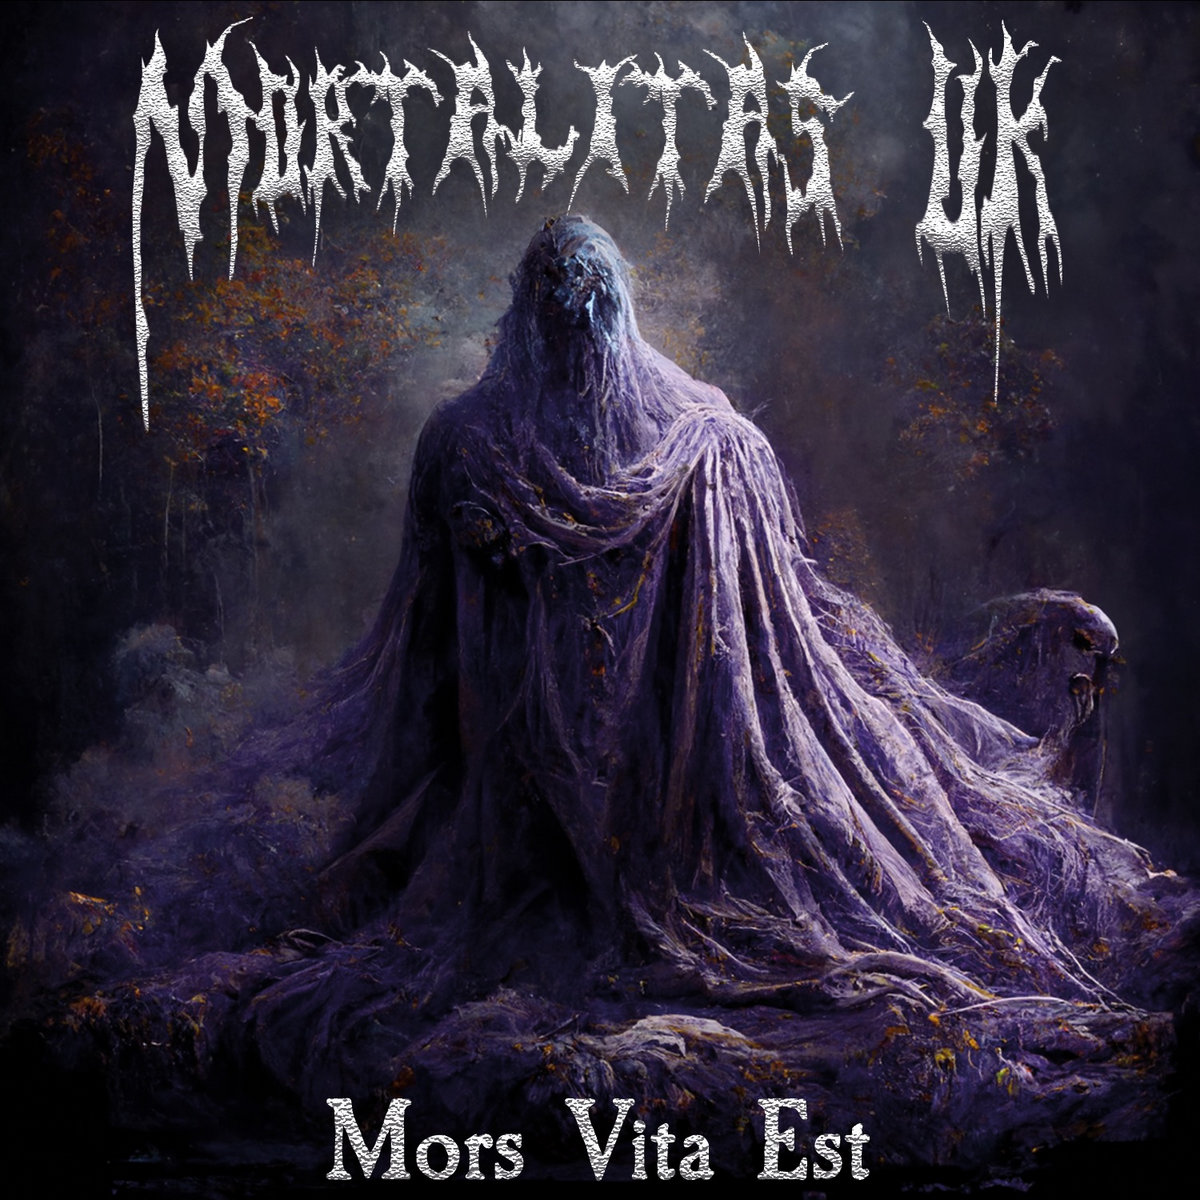 Mortalitas UK - "Mors Vita Est" - 2023